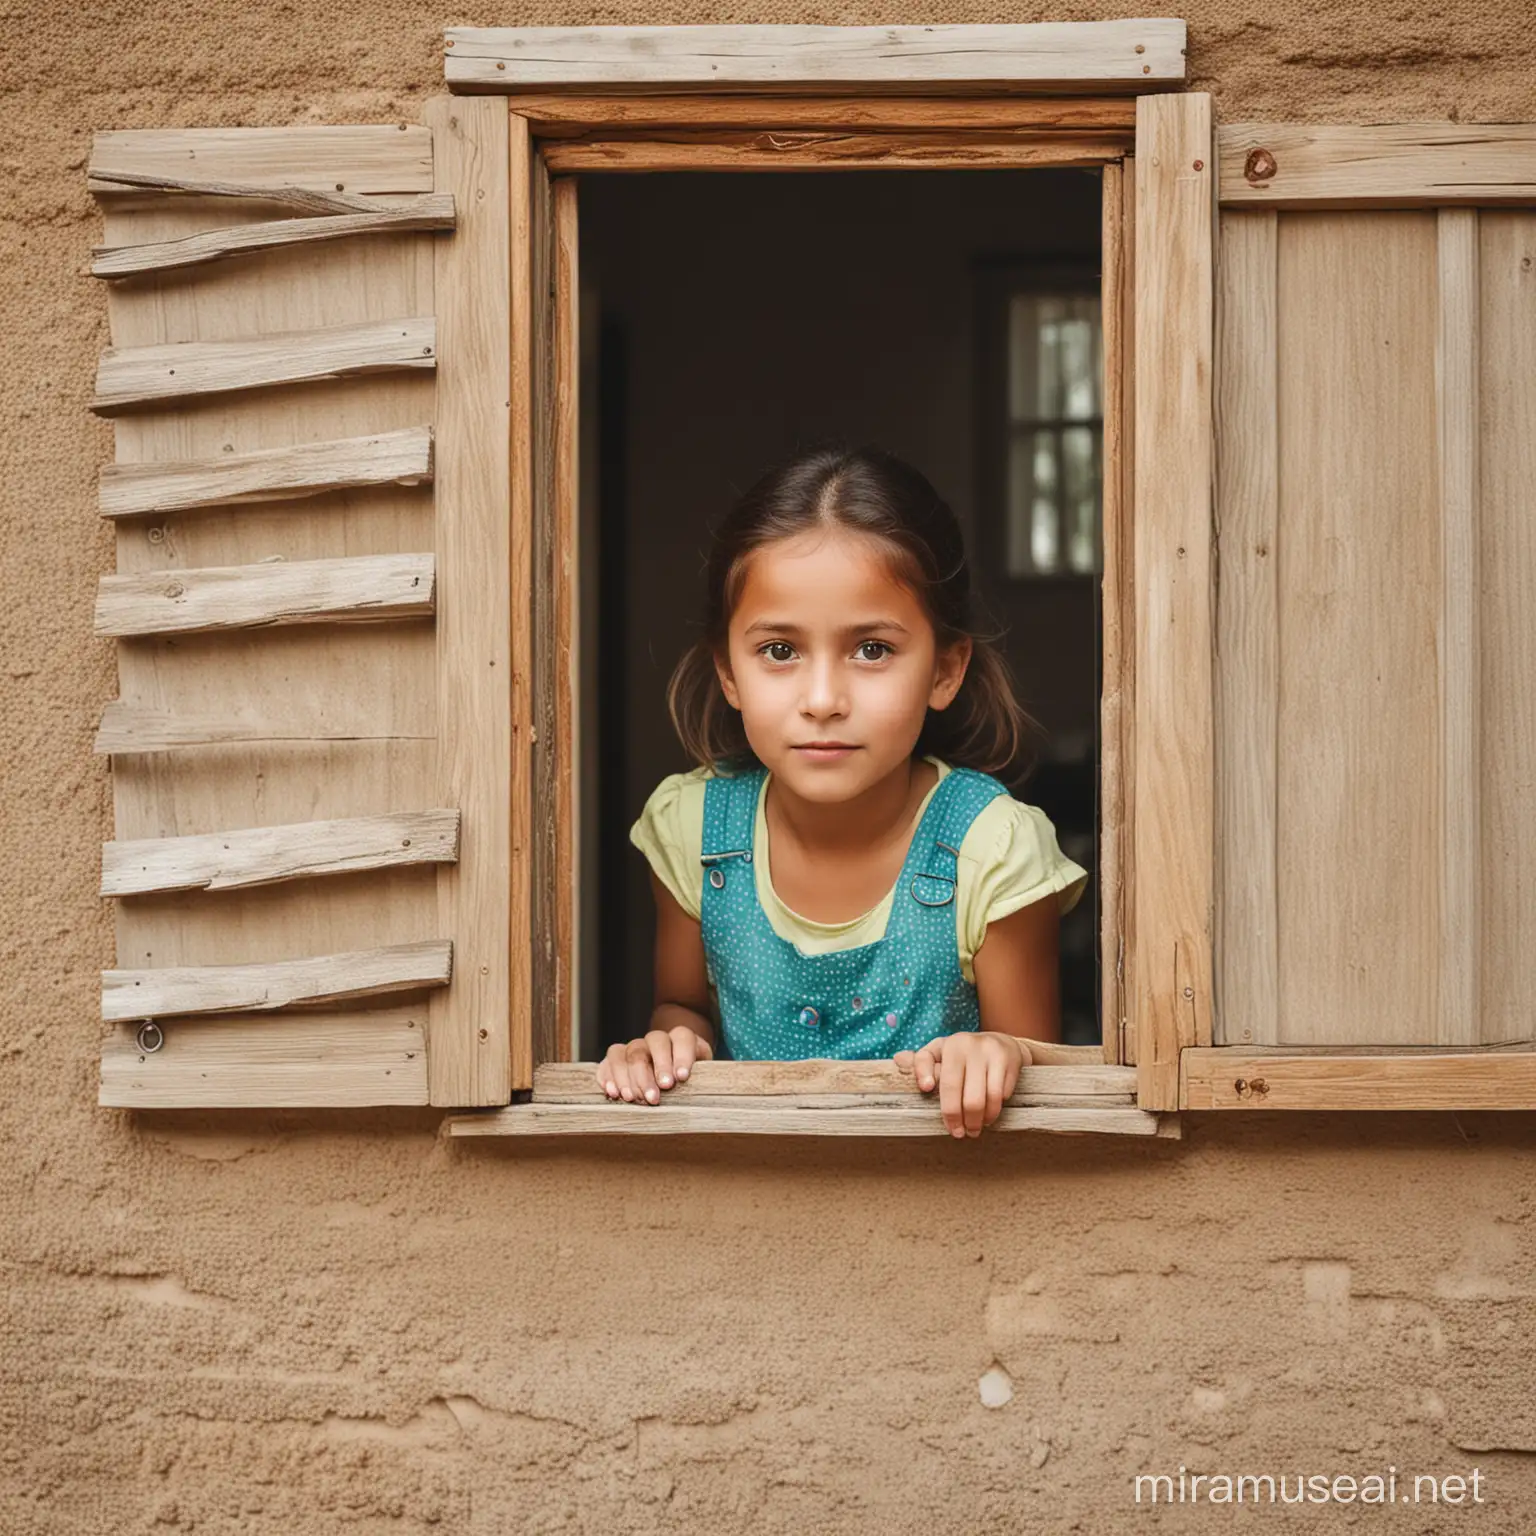 Curious Child Gazing Longingly Through a Window